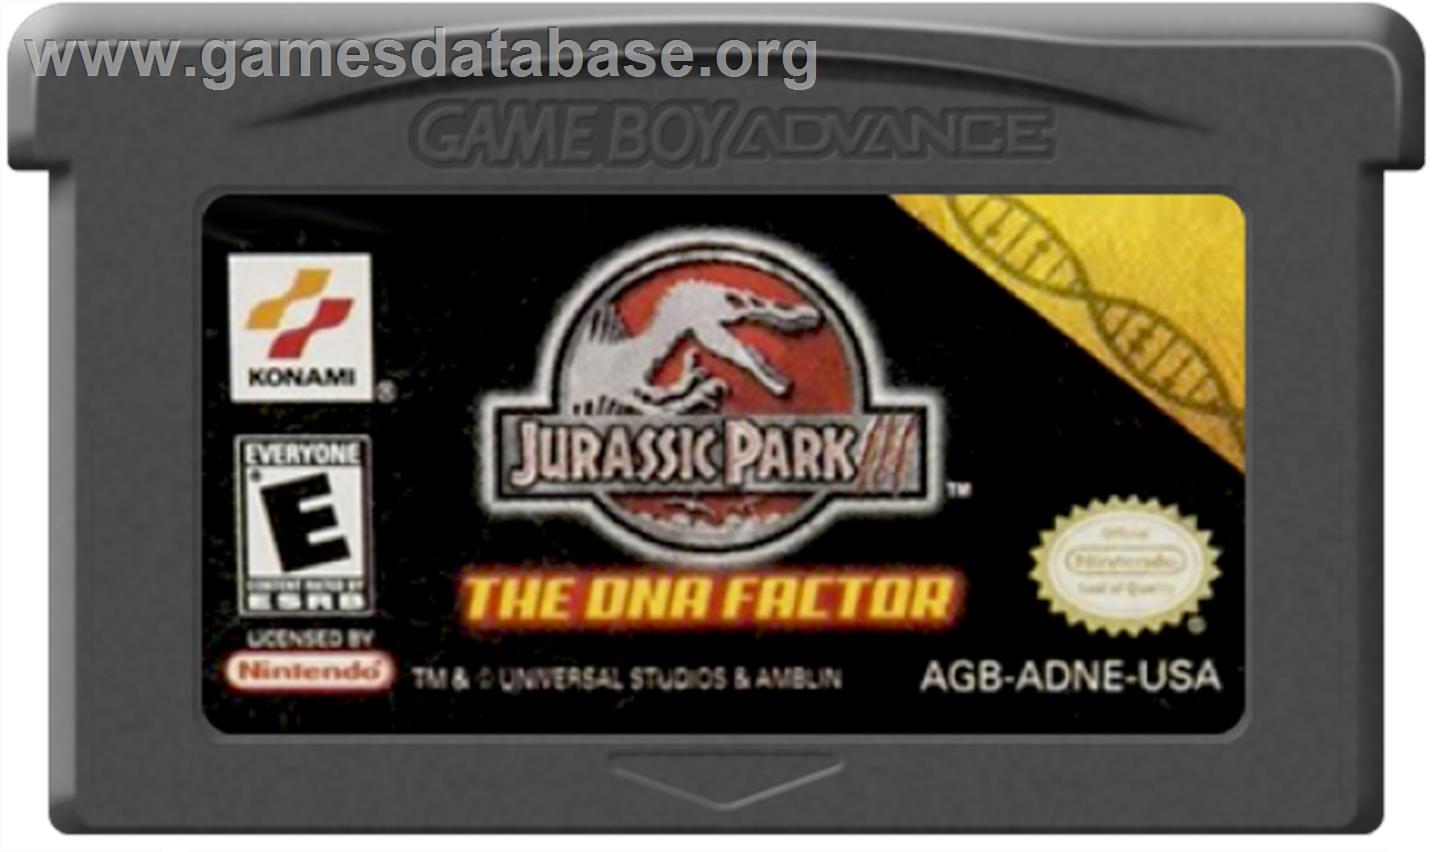 Jurassic Park III: The DNA Factor - Nintendo Game Boy Advance - Artwork - Cartridge